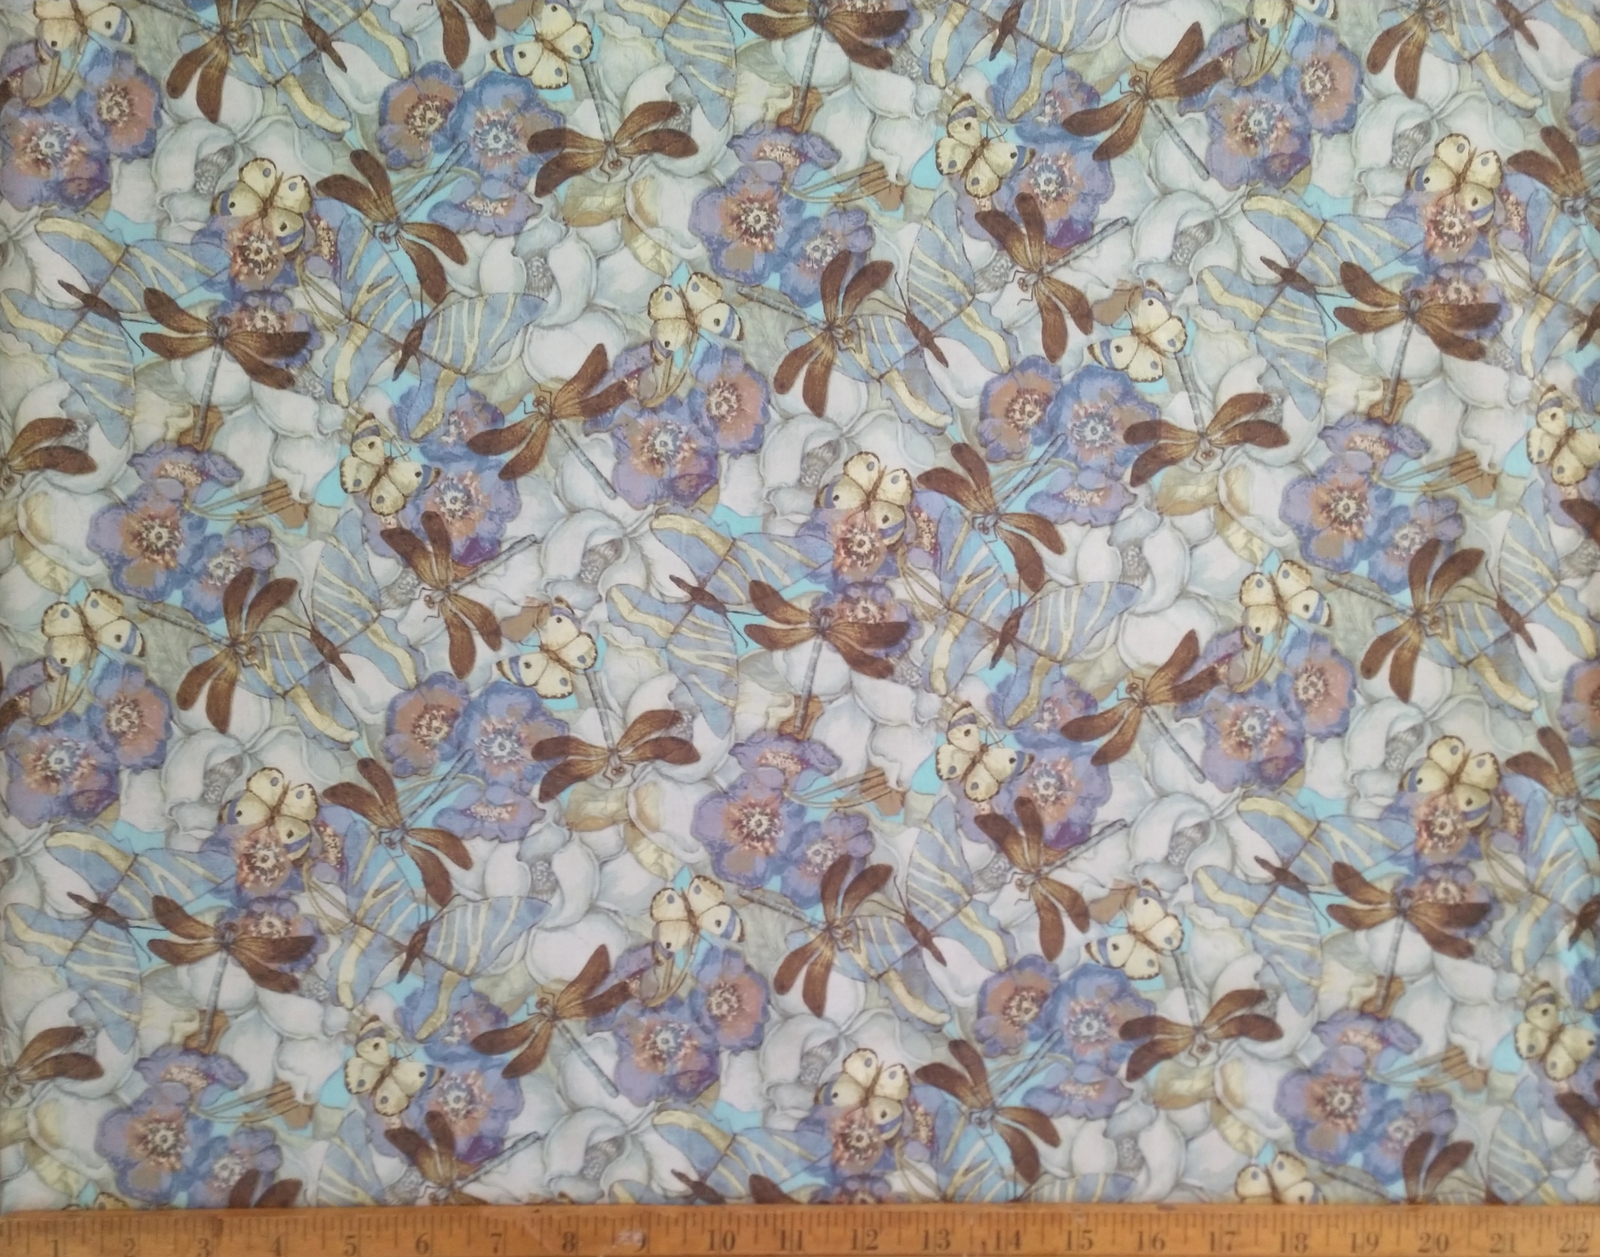 1/2 yd Dragonflies/Butterflies/Floral Pale Blues quilt fabric - $6.99